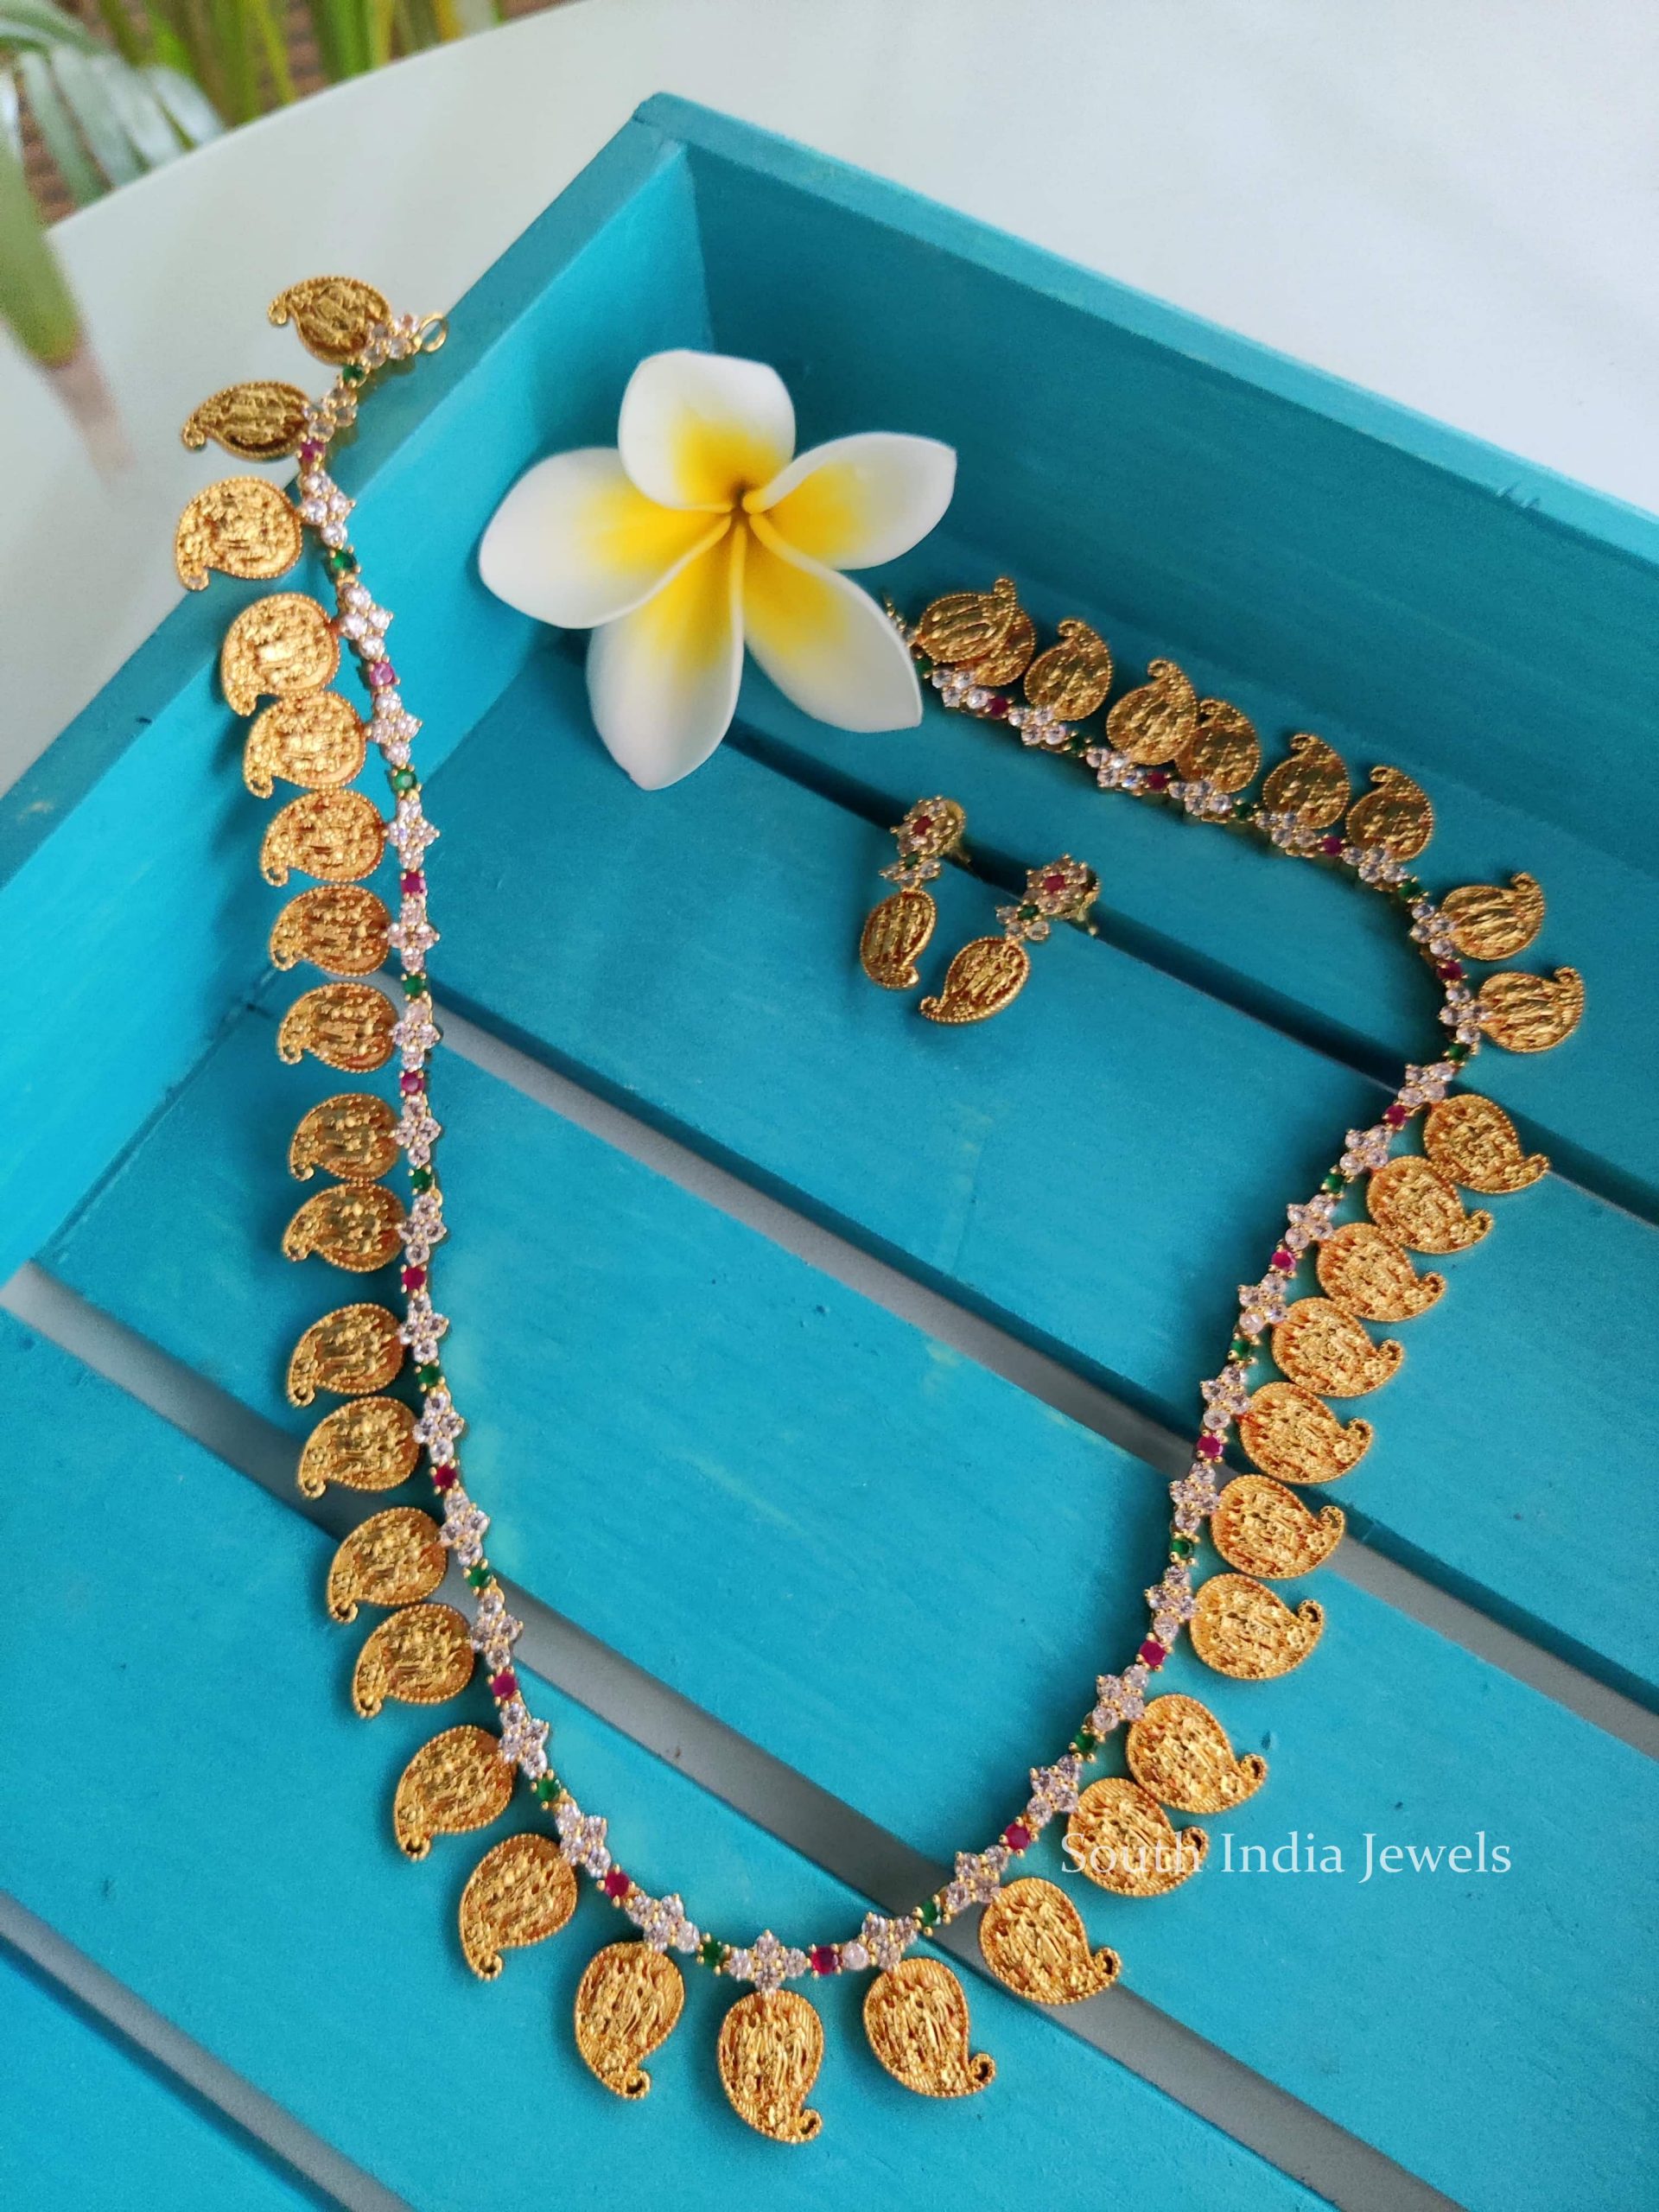 Details more than 121 ramparivar necklace gold super hot ...